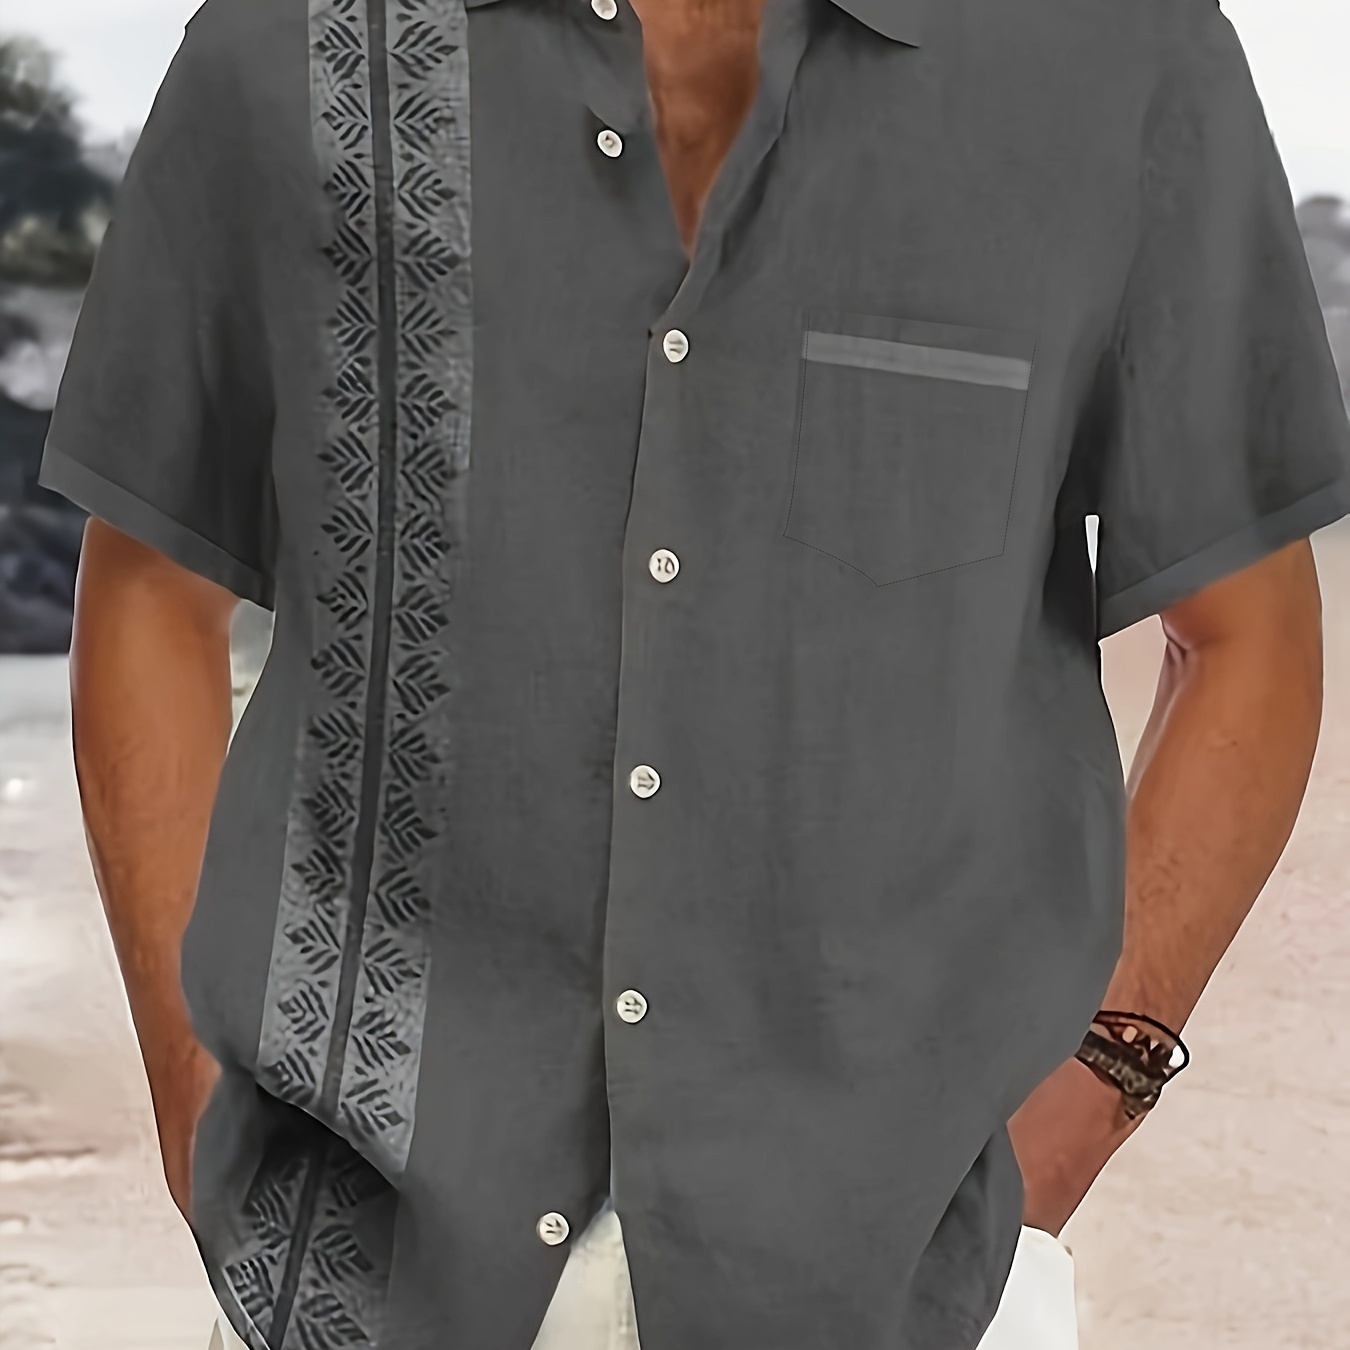 

Plus Size Men's Shirt, Creative Pattern Print Short Sleeve Shirt, Summer Trendy Casual Leisurewear For Big & Tall Male